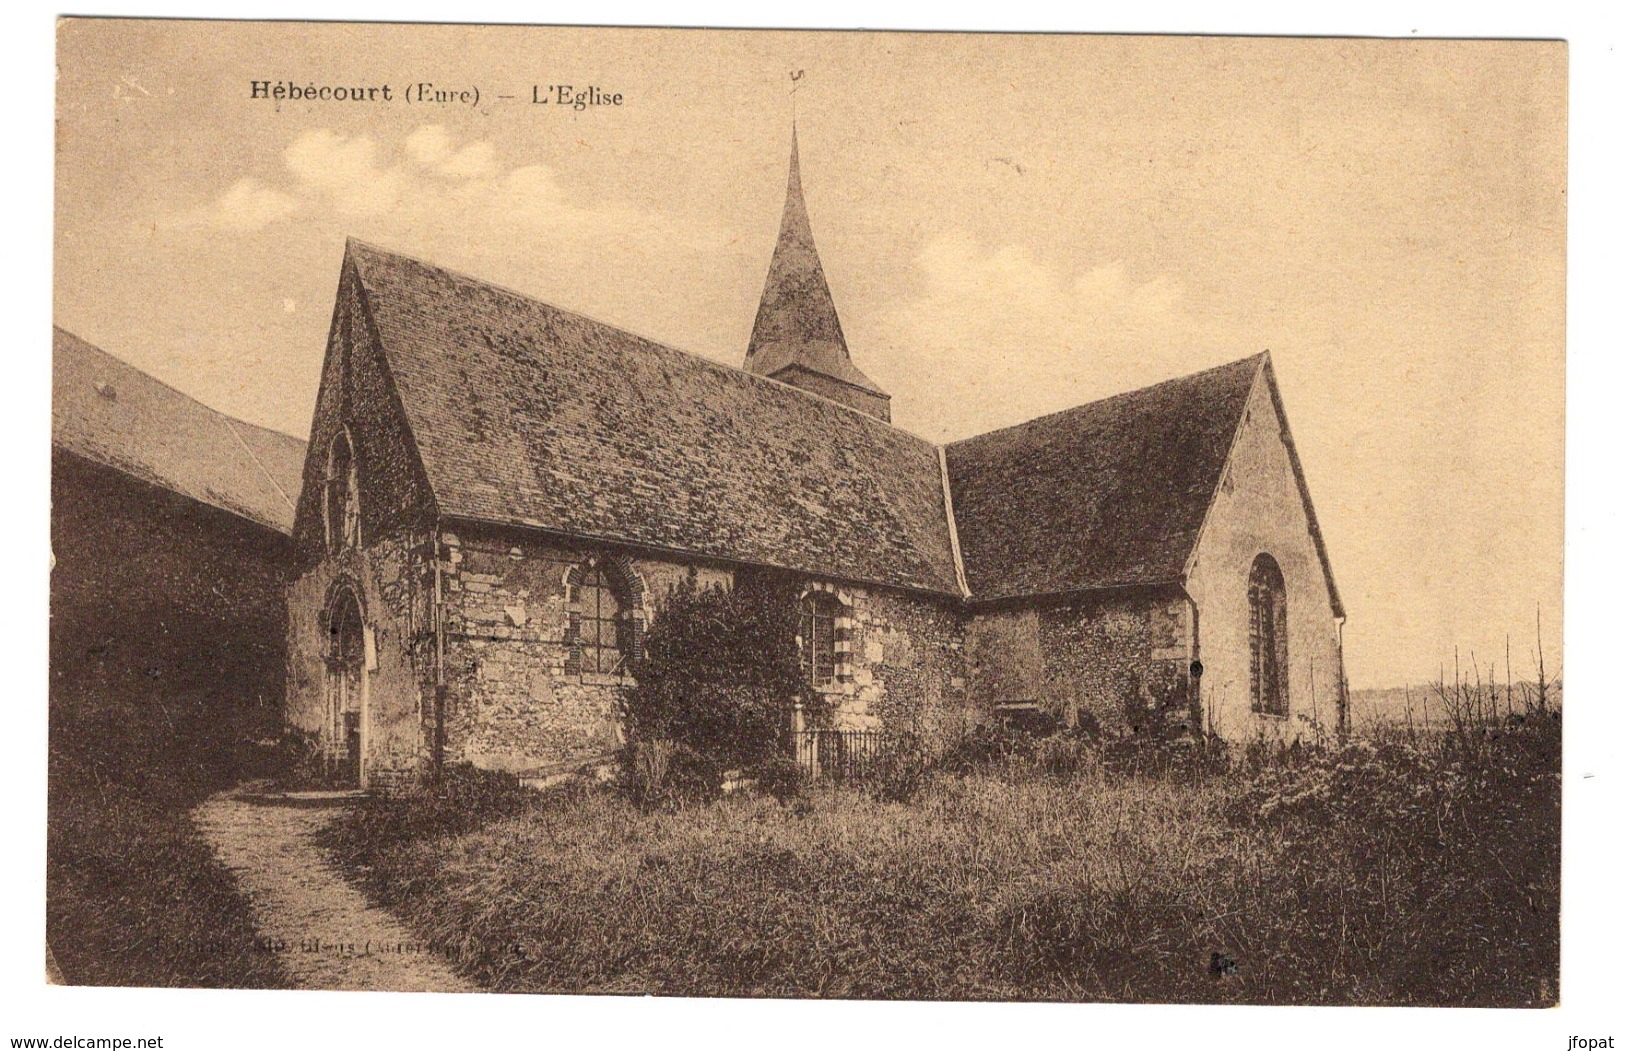 27 EURE - HEBECOURT L'Eglise - Hébécourt